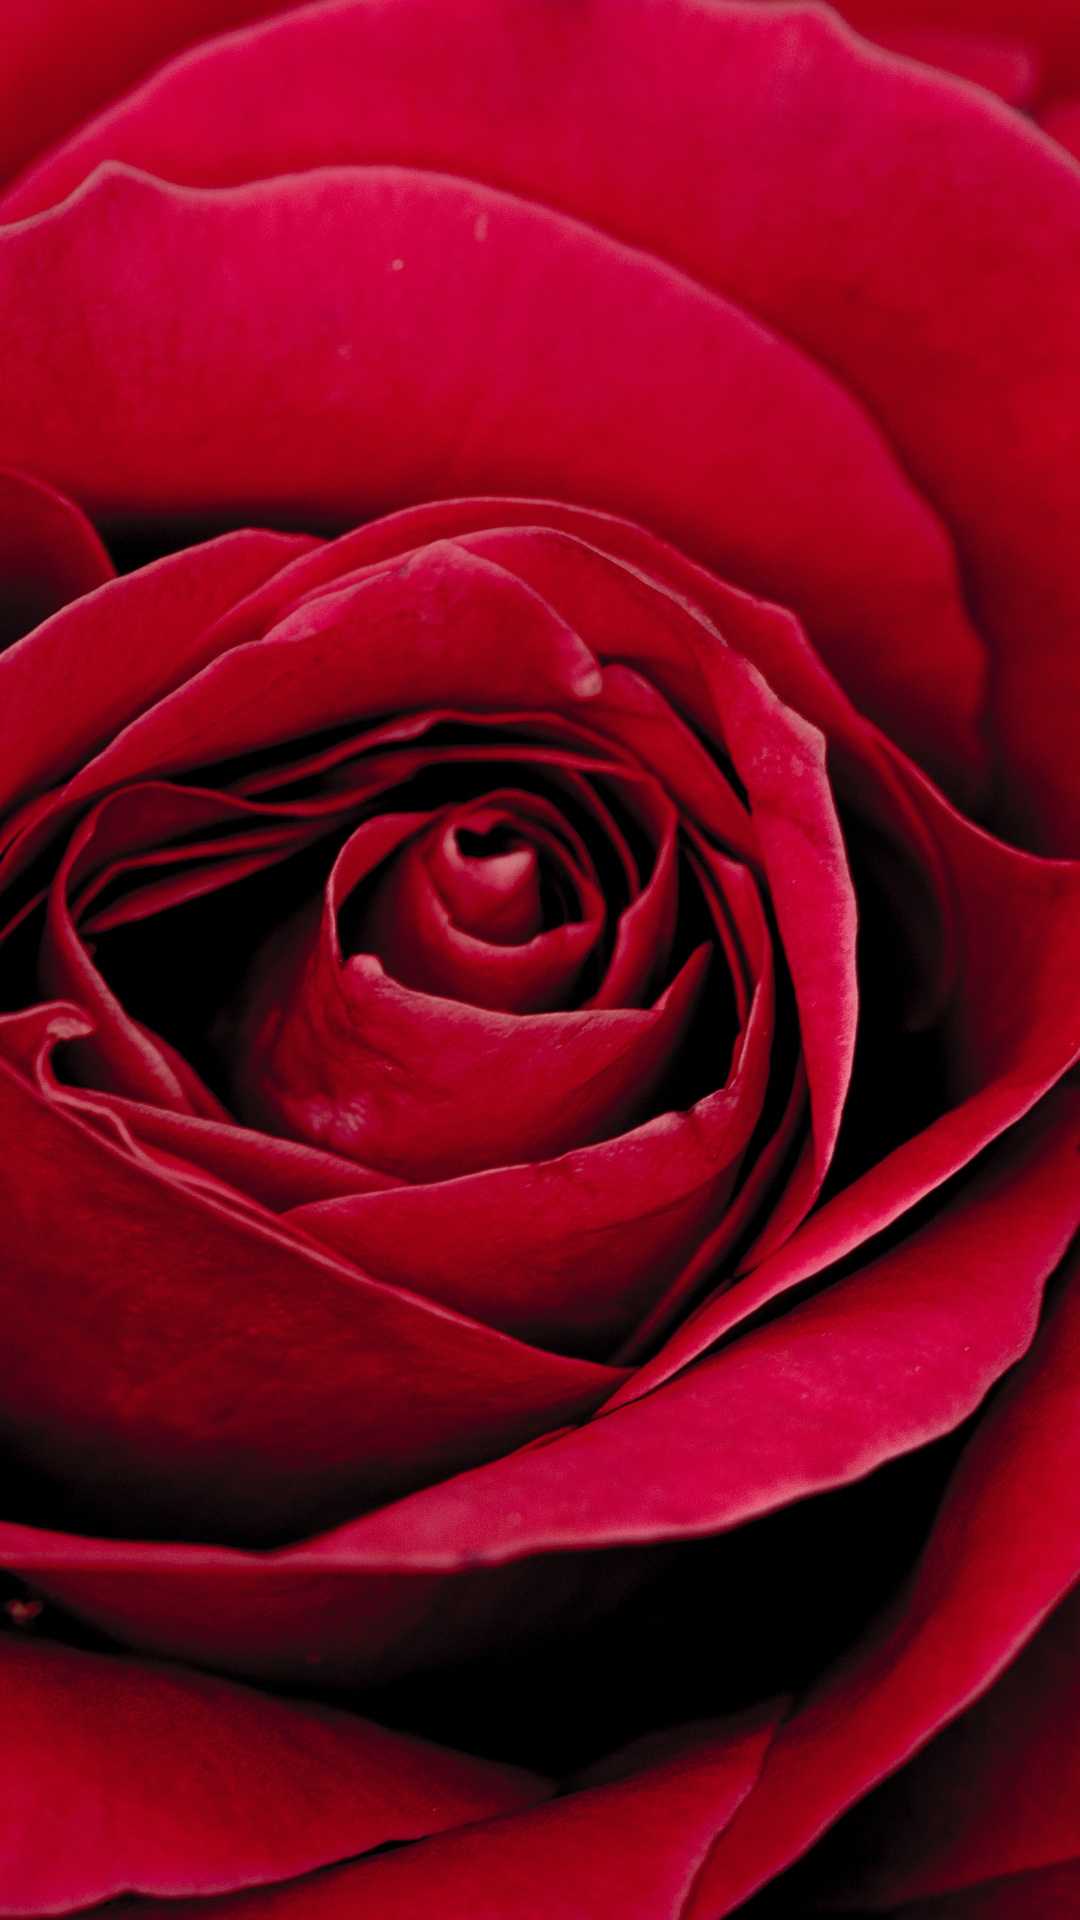 Rose Rouge en Fleur Photo en Gros Plan. Wallpaper in 1080x1920 Resolution